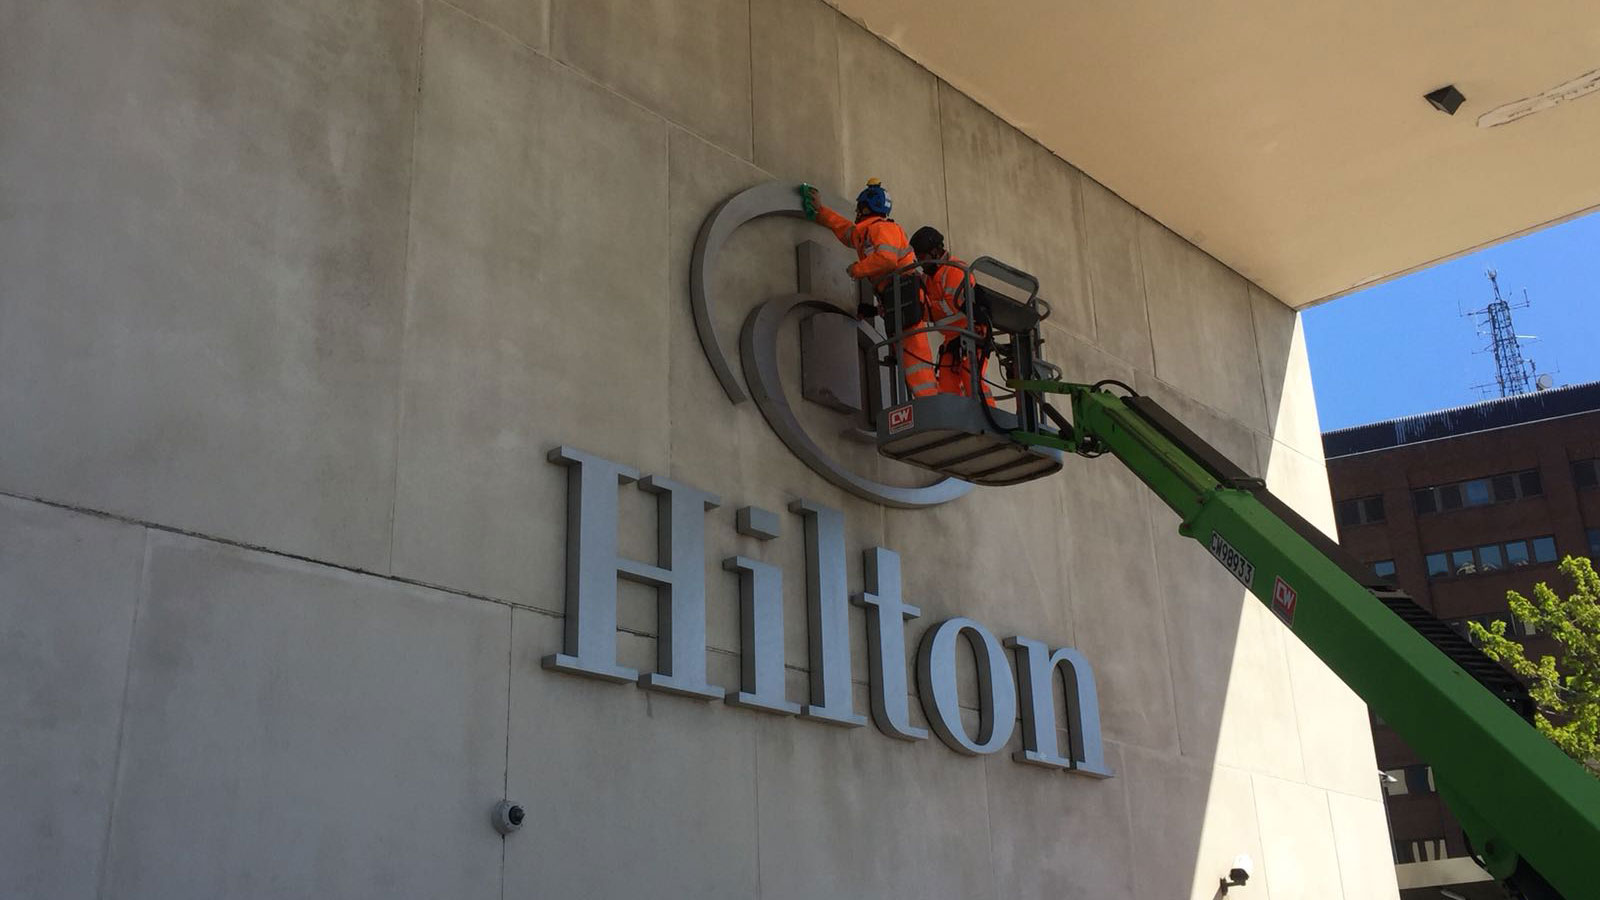 Hilton Sign Maintenance